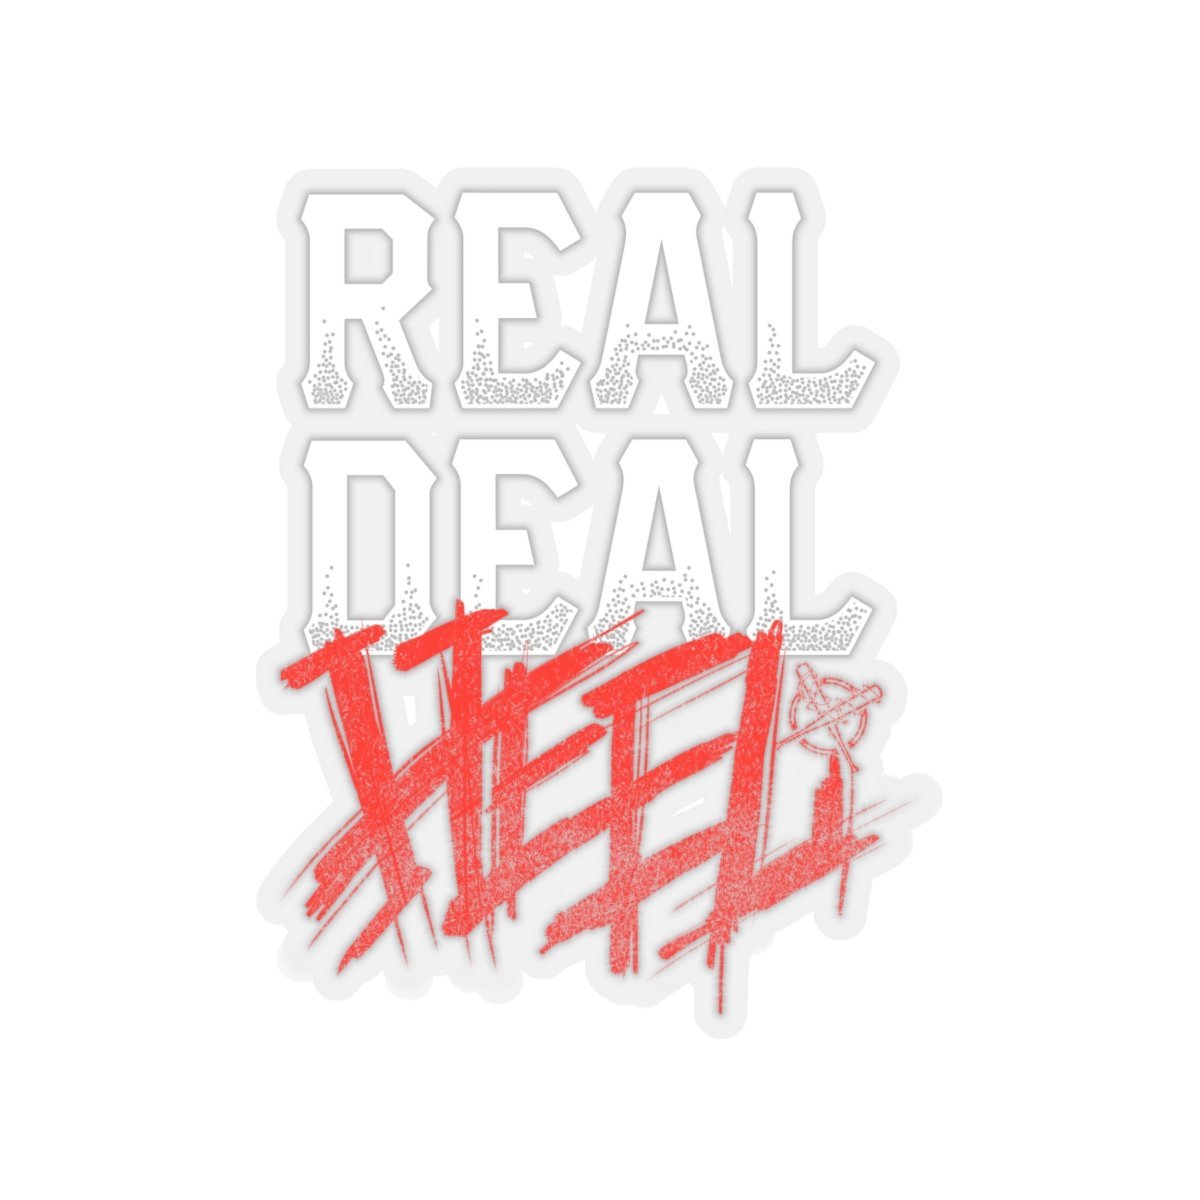 Real Deal Heel Kiss-Cut Stickers